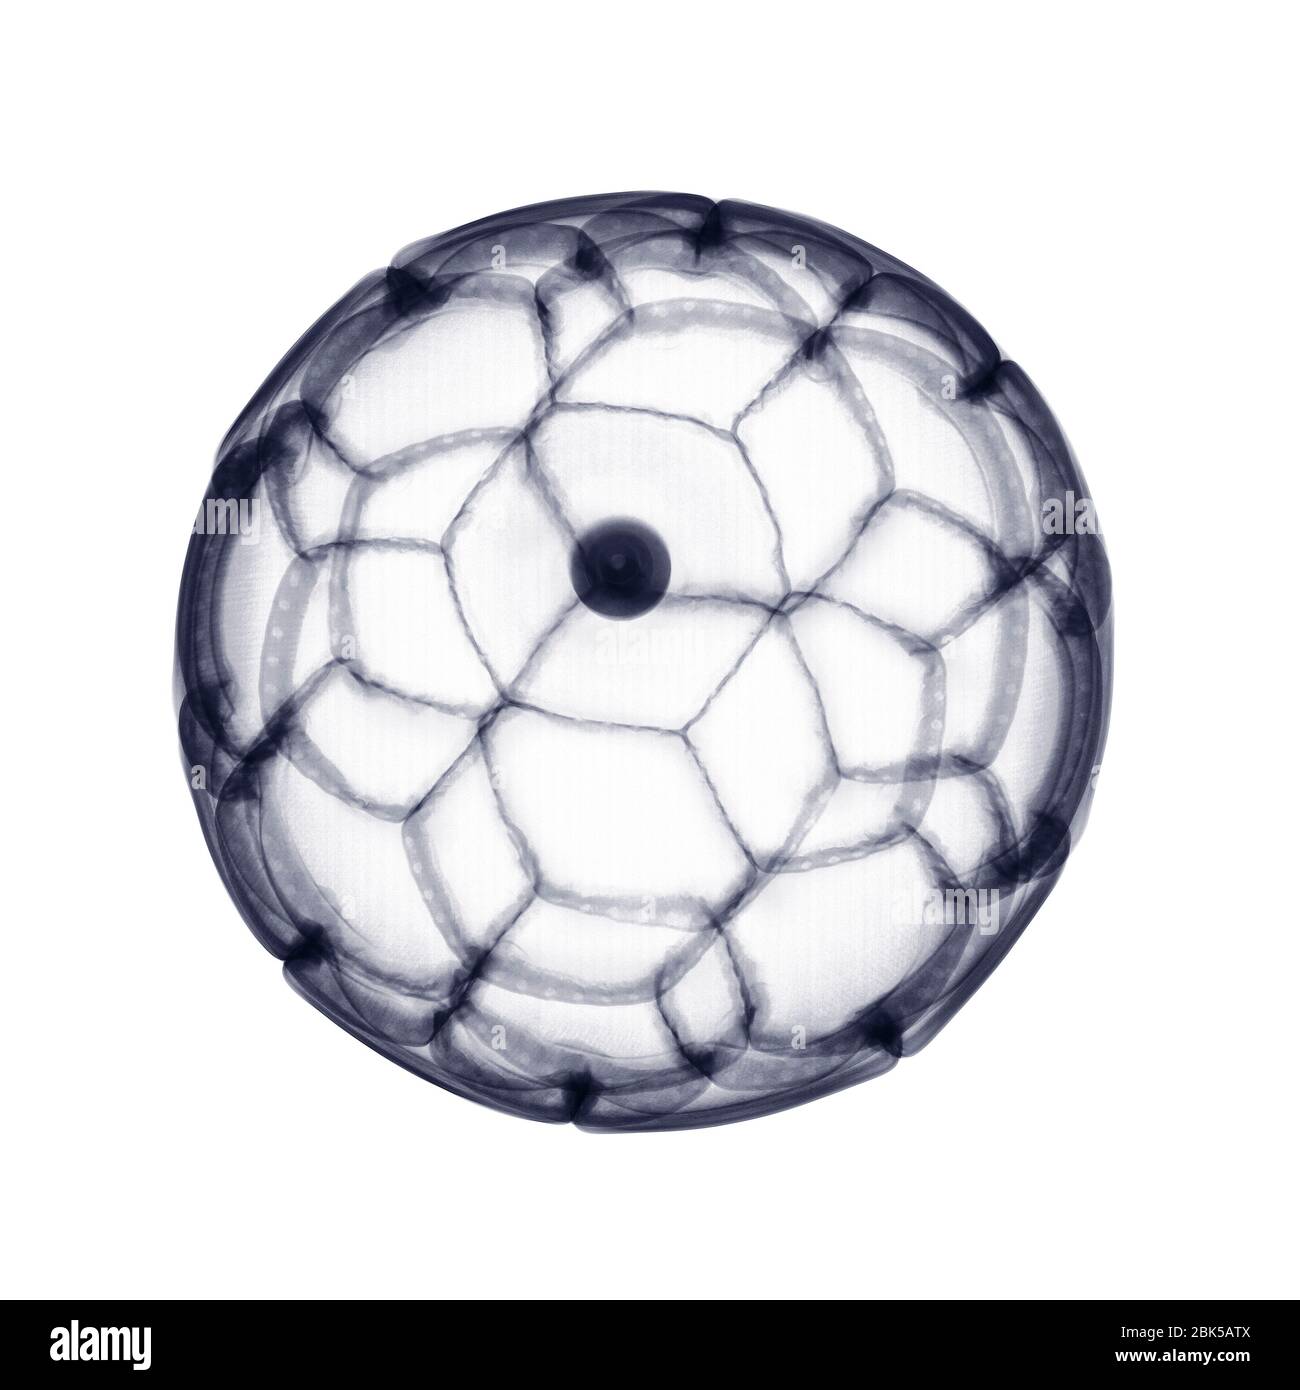 Leather football, X-ray. Stock Photo